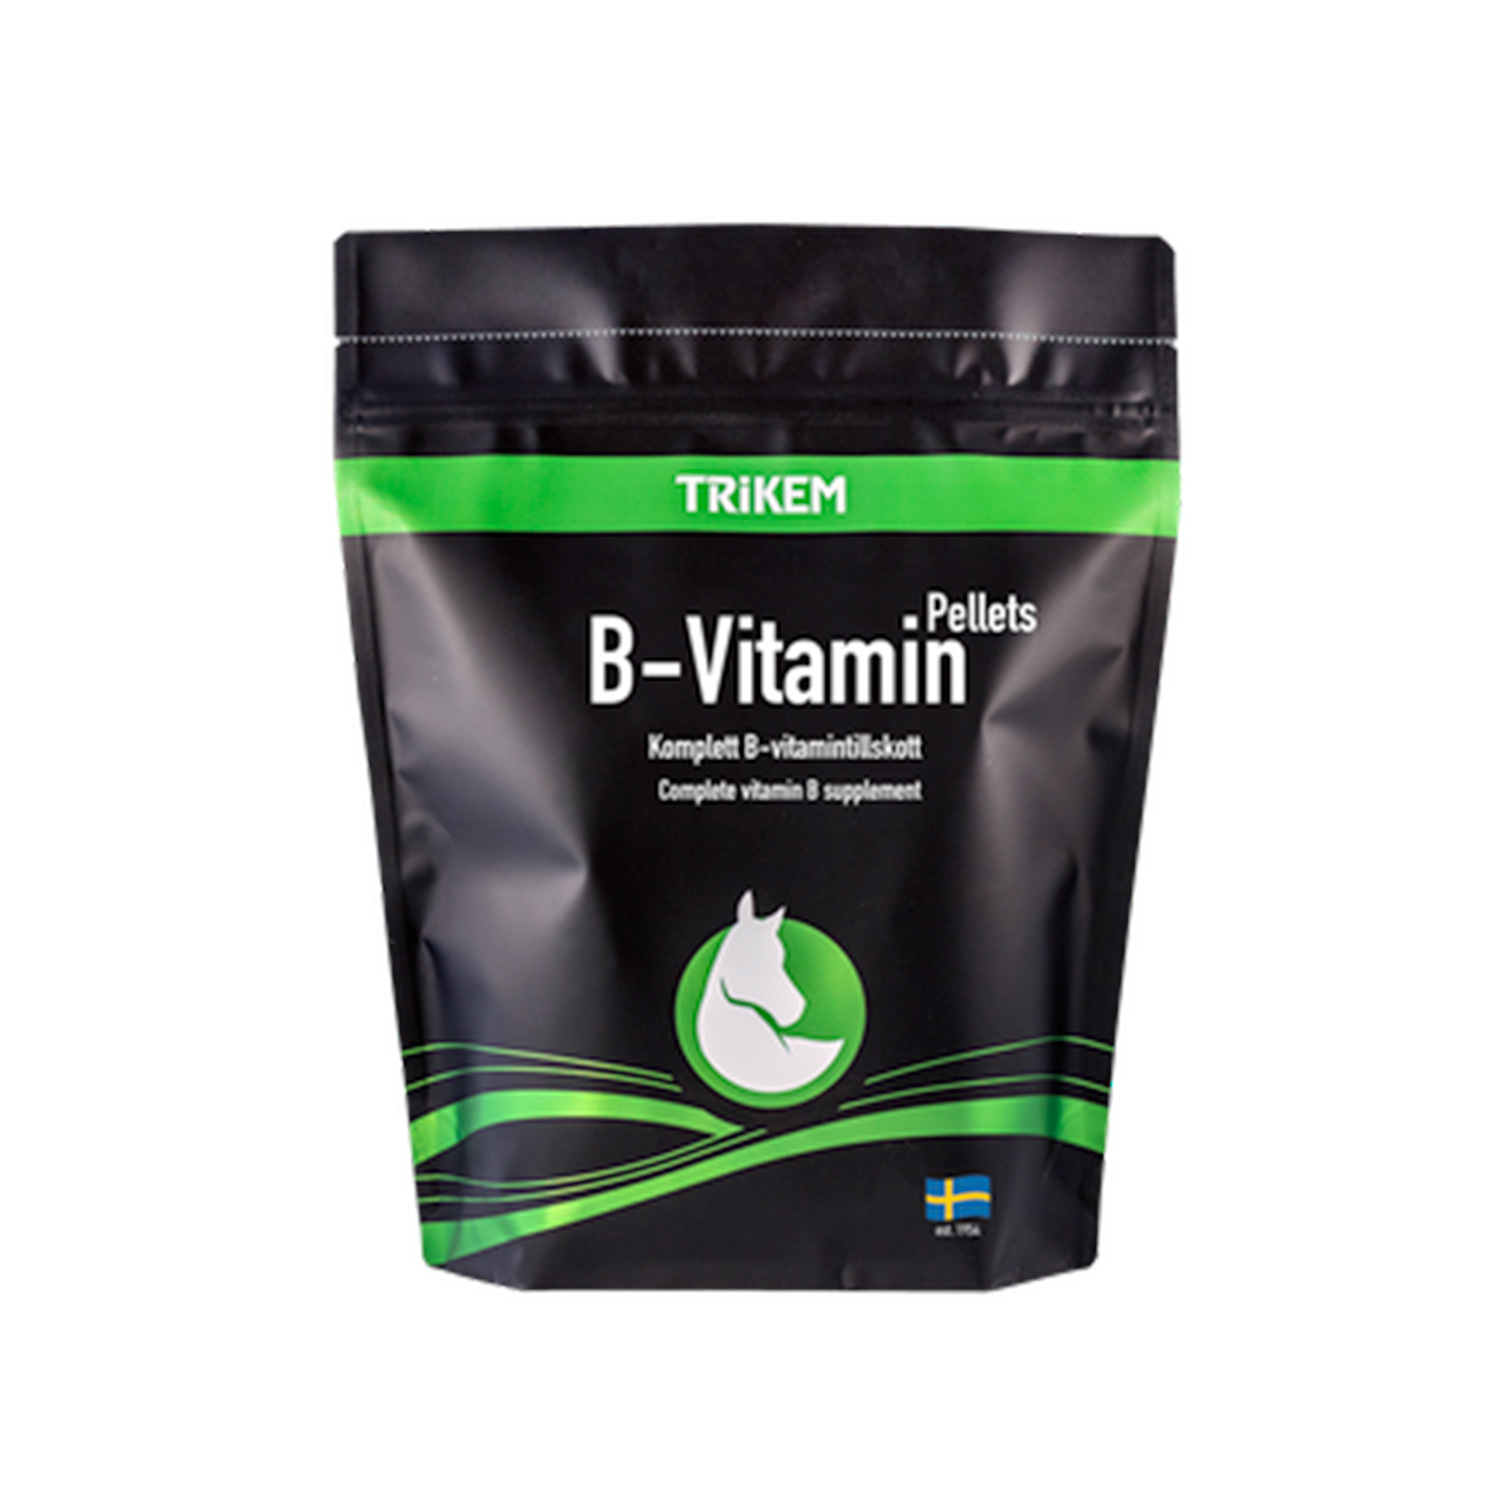 Trikem B-Vitamin Pellets 1kg